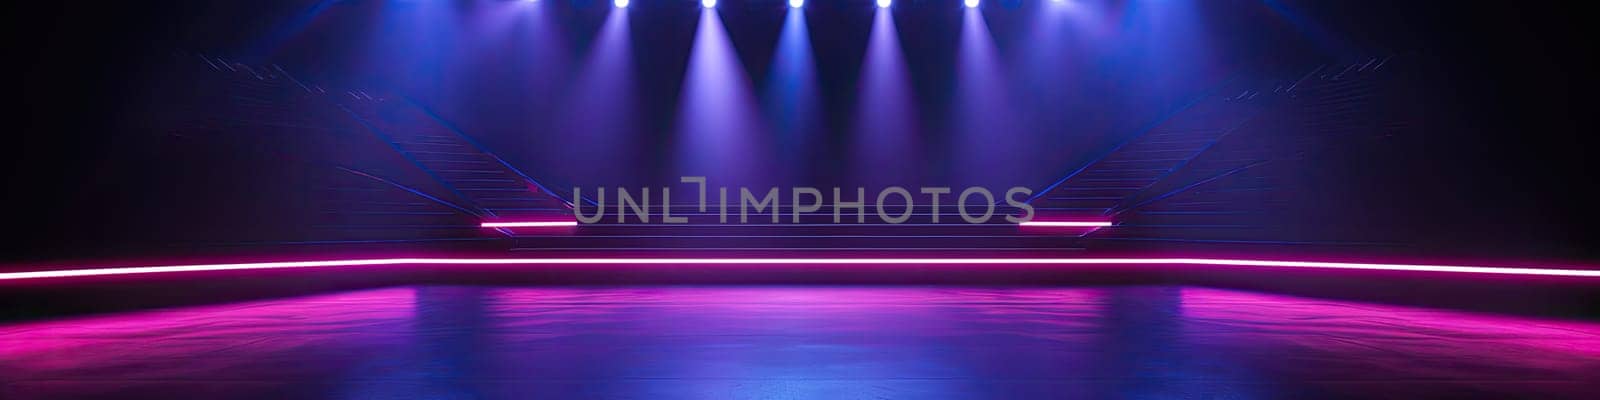 The dark stage show empty dark blue purple pink background with neon light, clear stand